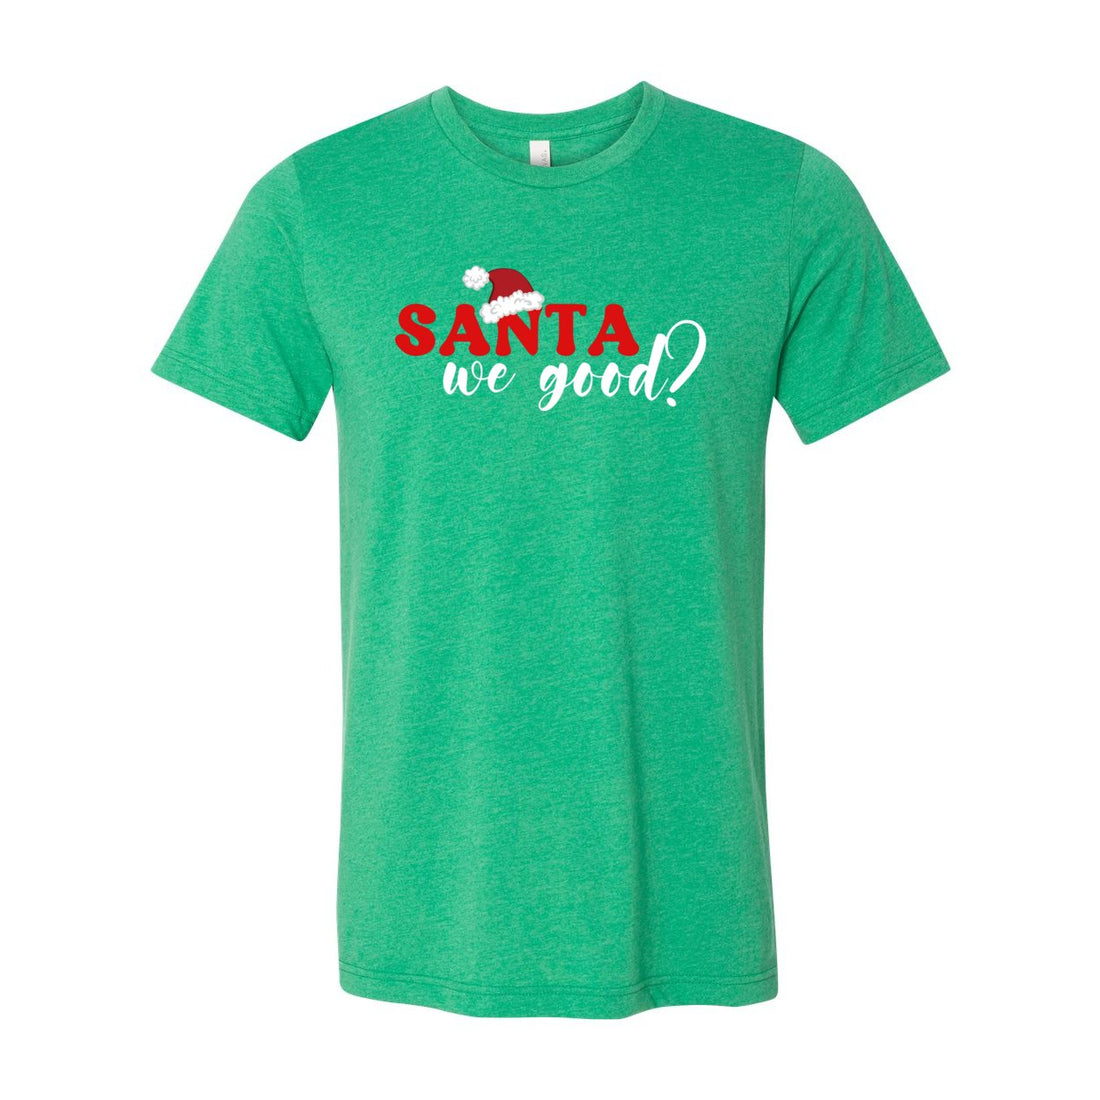 Santa We Good? - T-Shirts - Positively Sassy - Santa We Good?